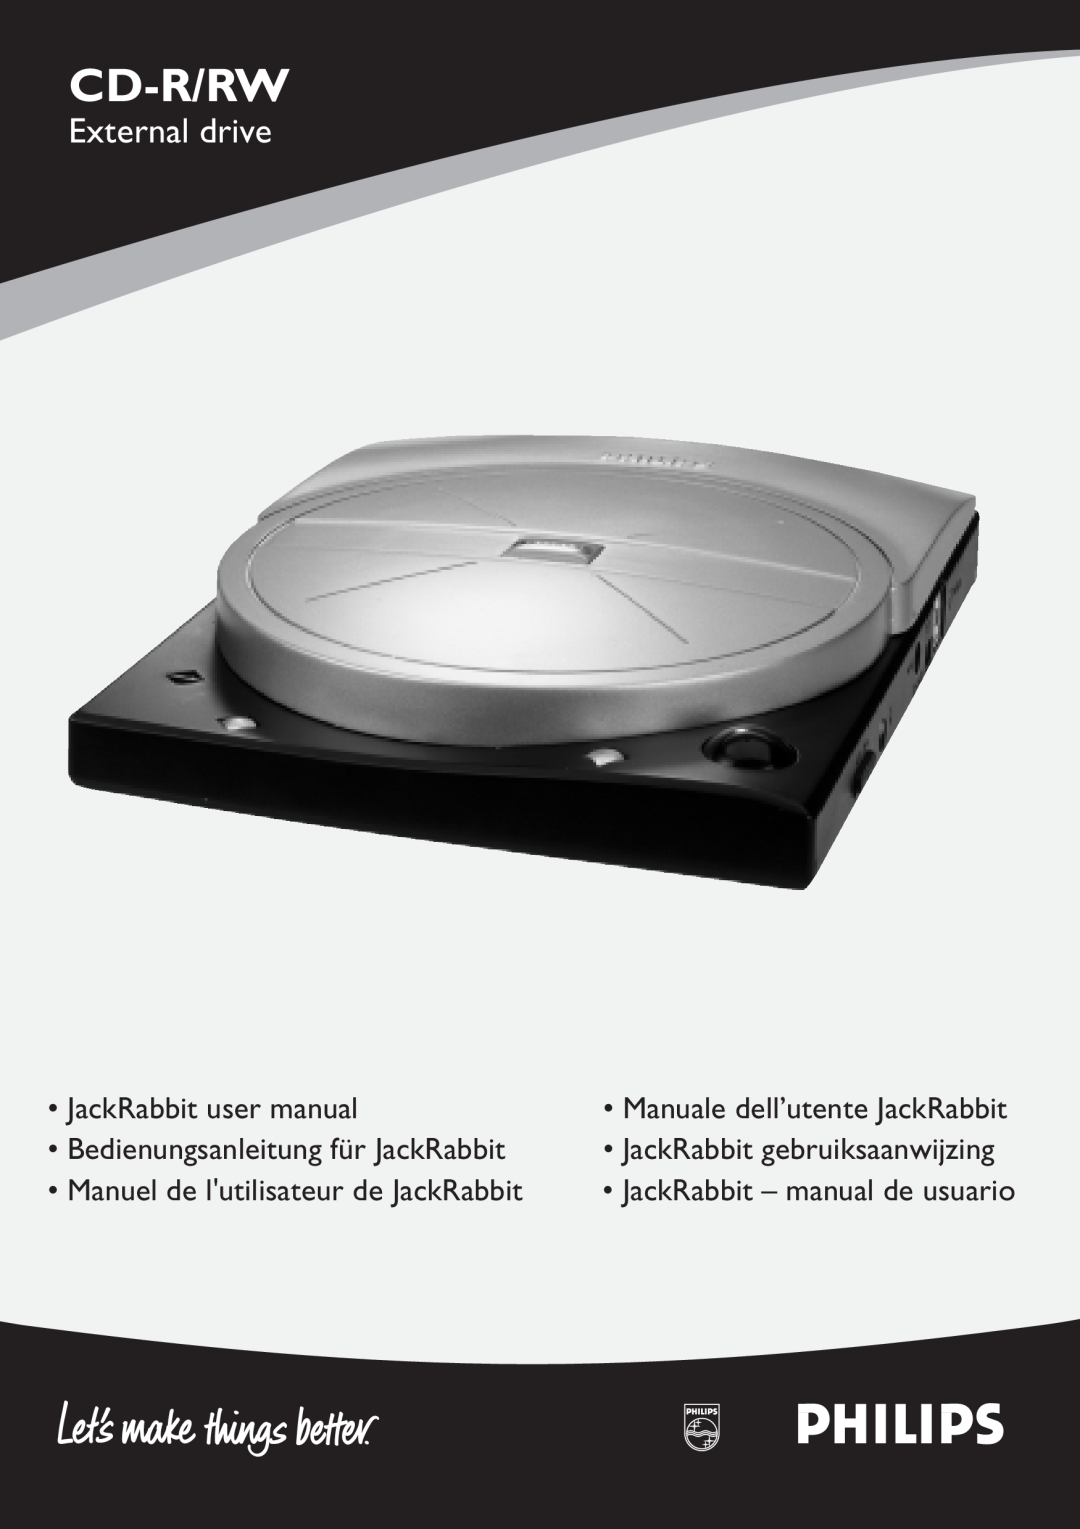 Philips CD-R/RW user manual Cd-R/Rw, External drive, Bedienungsanleitung für JackRabbit, Manuale dell’utente JackRabbit 